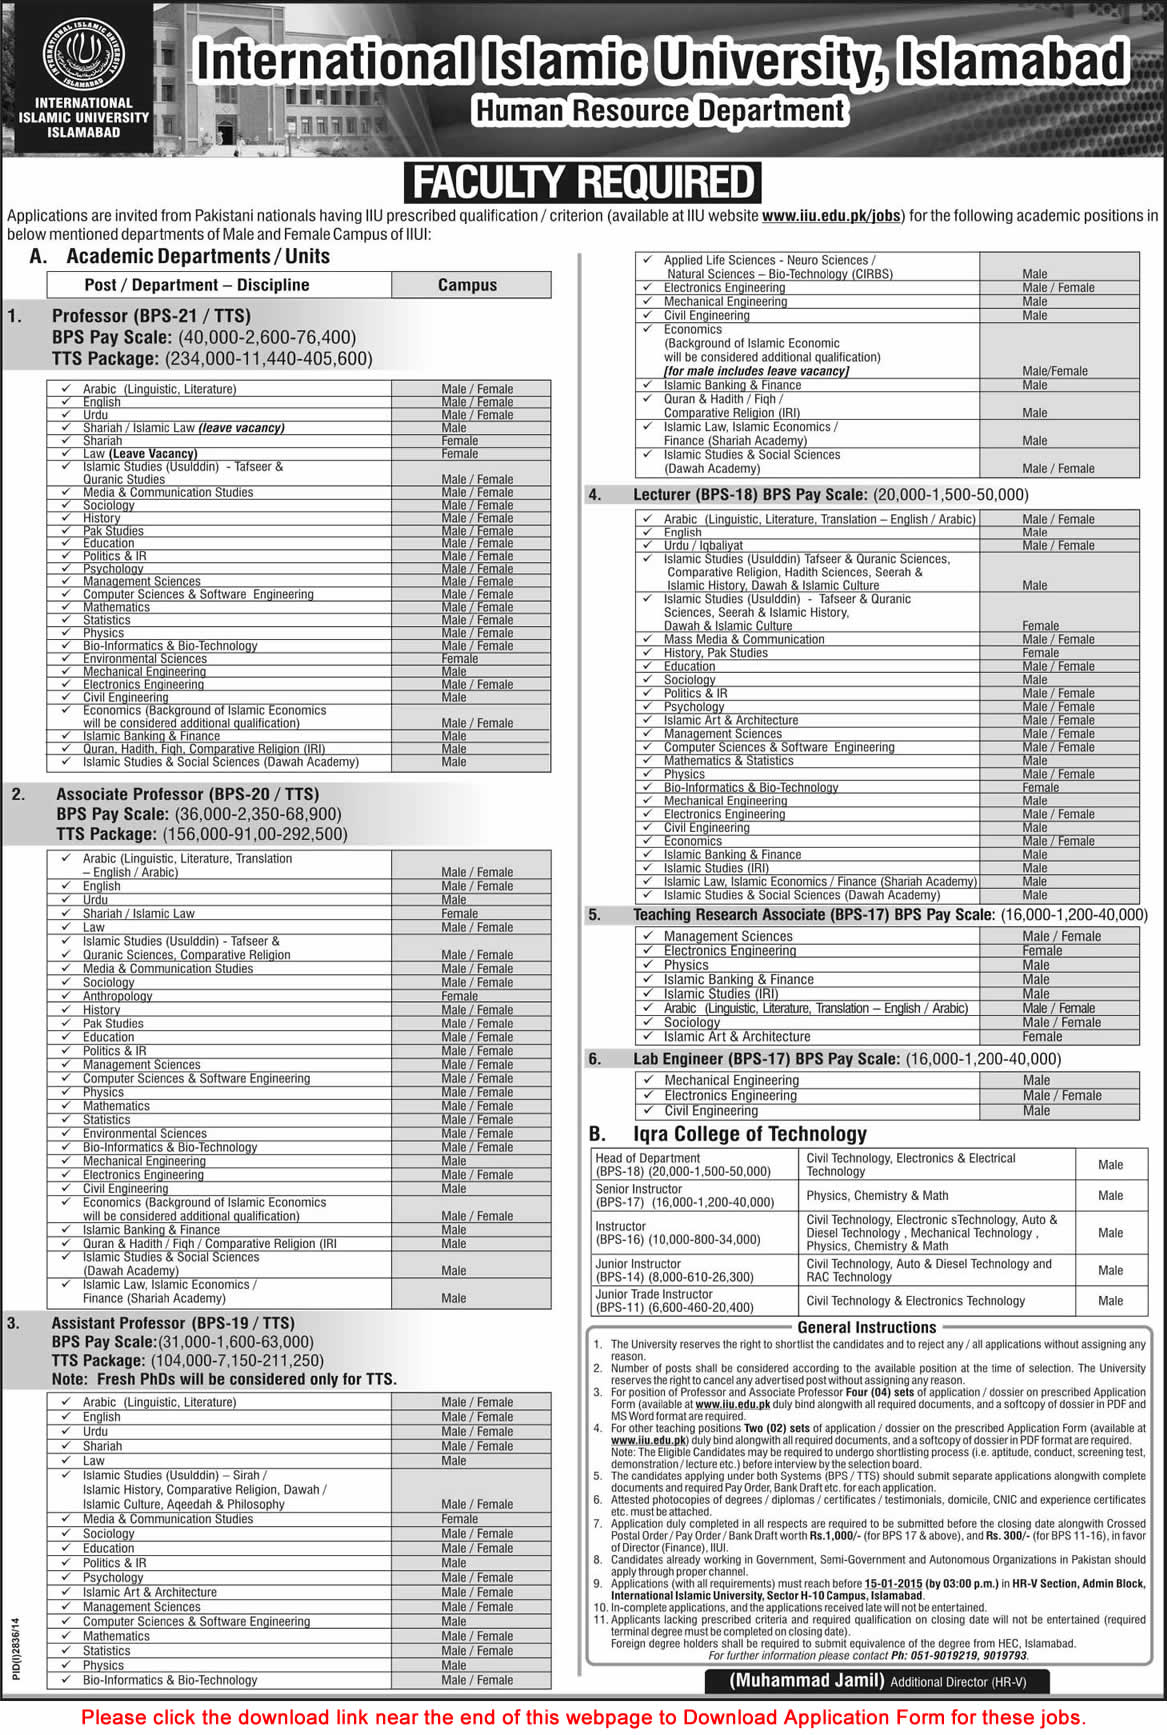 International Islamic University Islamabad Jobs 2014 December IIU Application Form Download